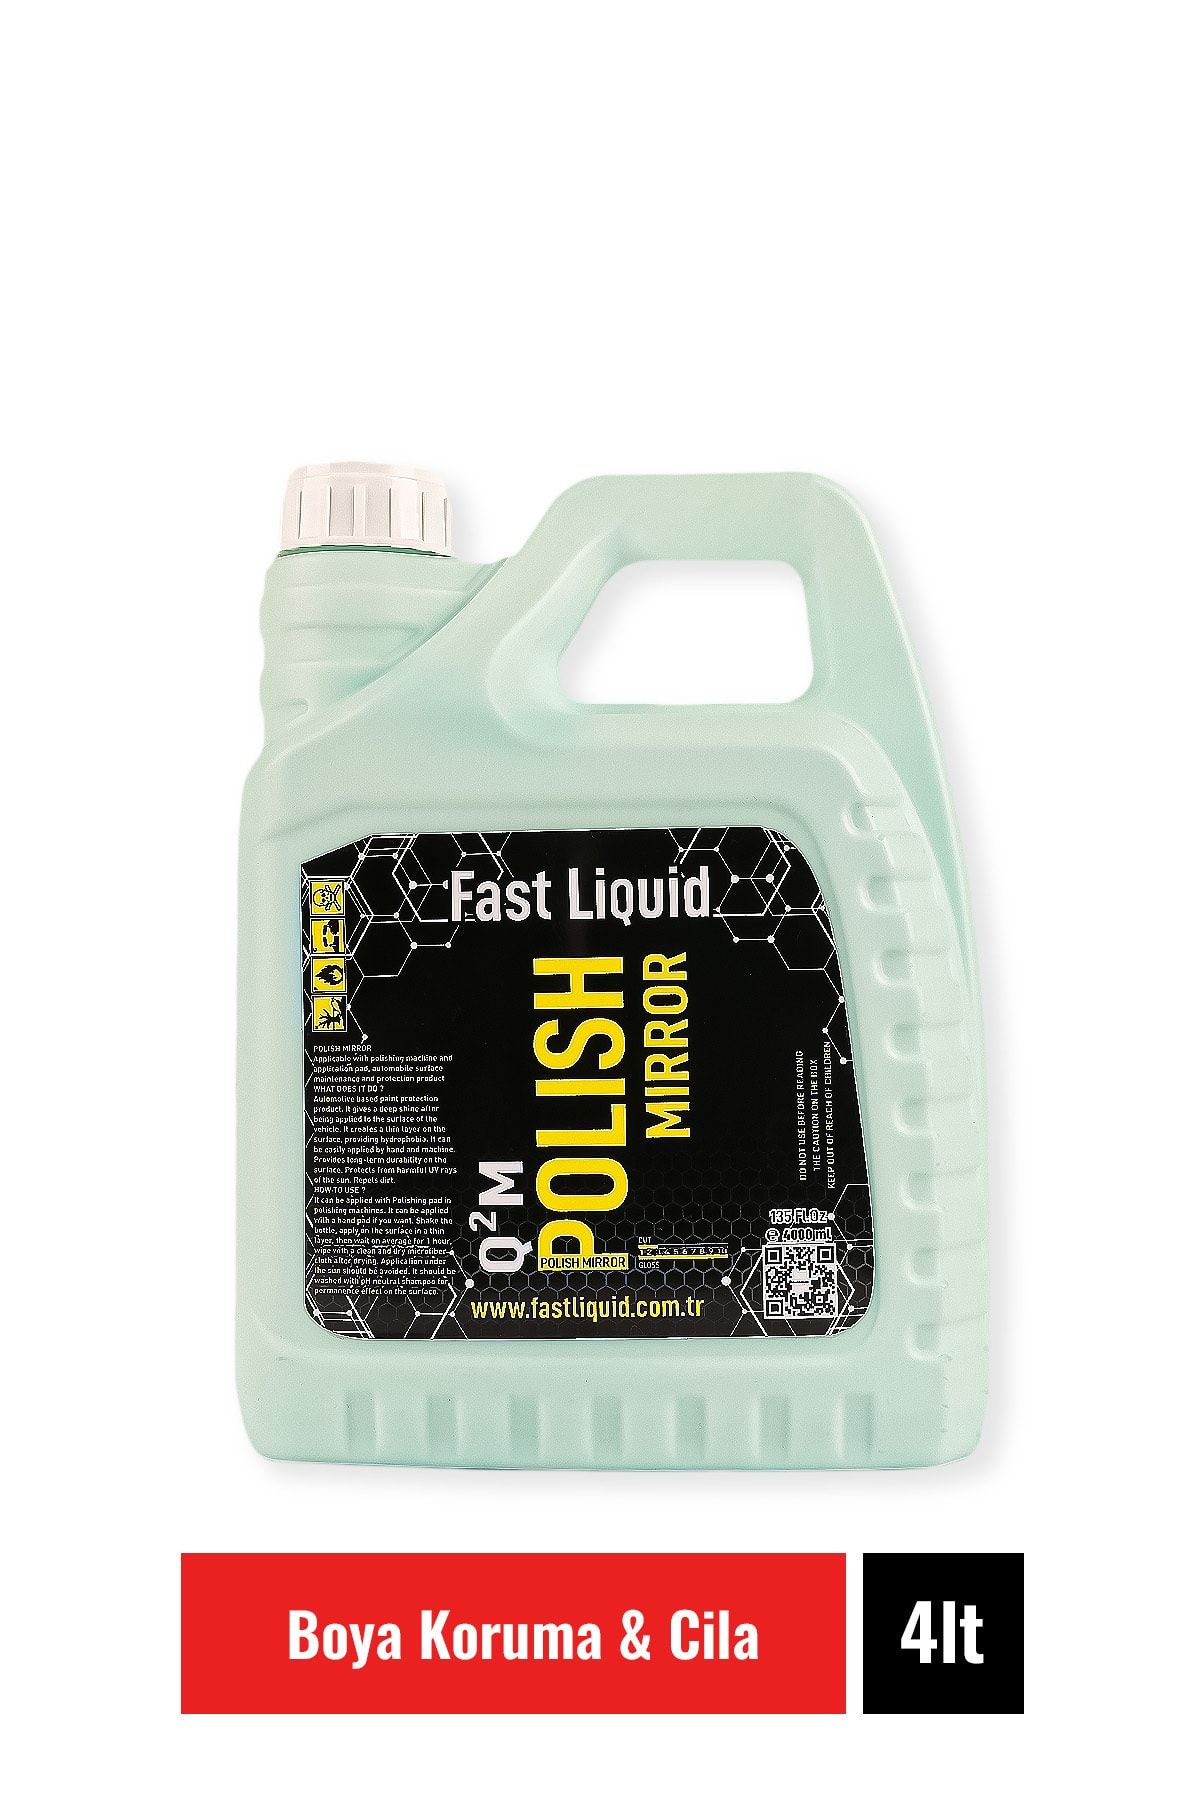 Fast Liquid Polısh Mırror 4 Lt - Boya Koruma Hare Giderici Cila Sio2 Katkılı